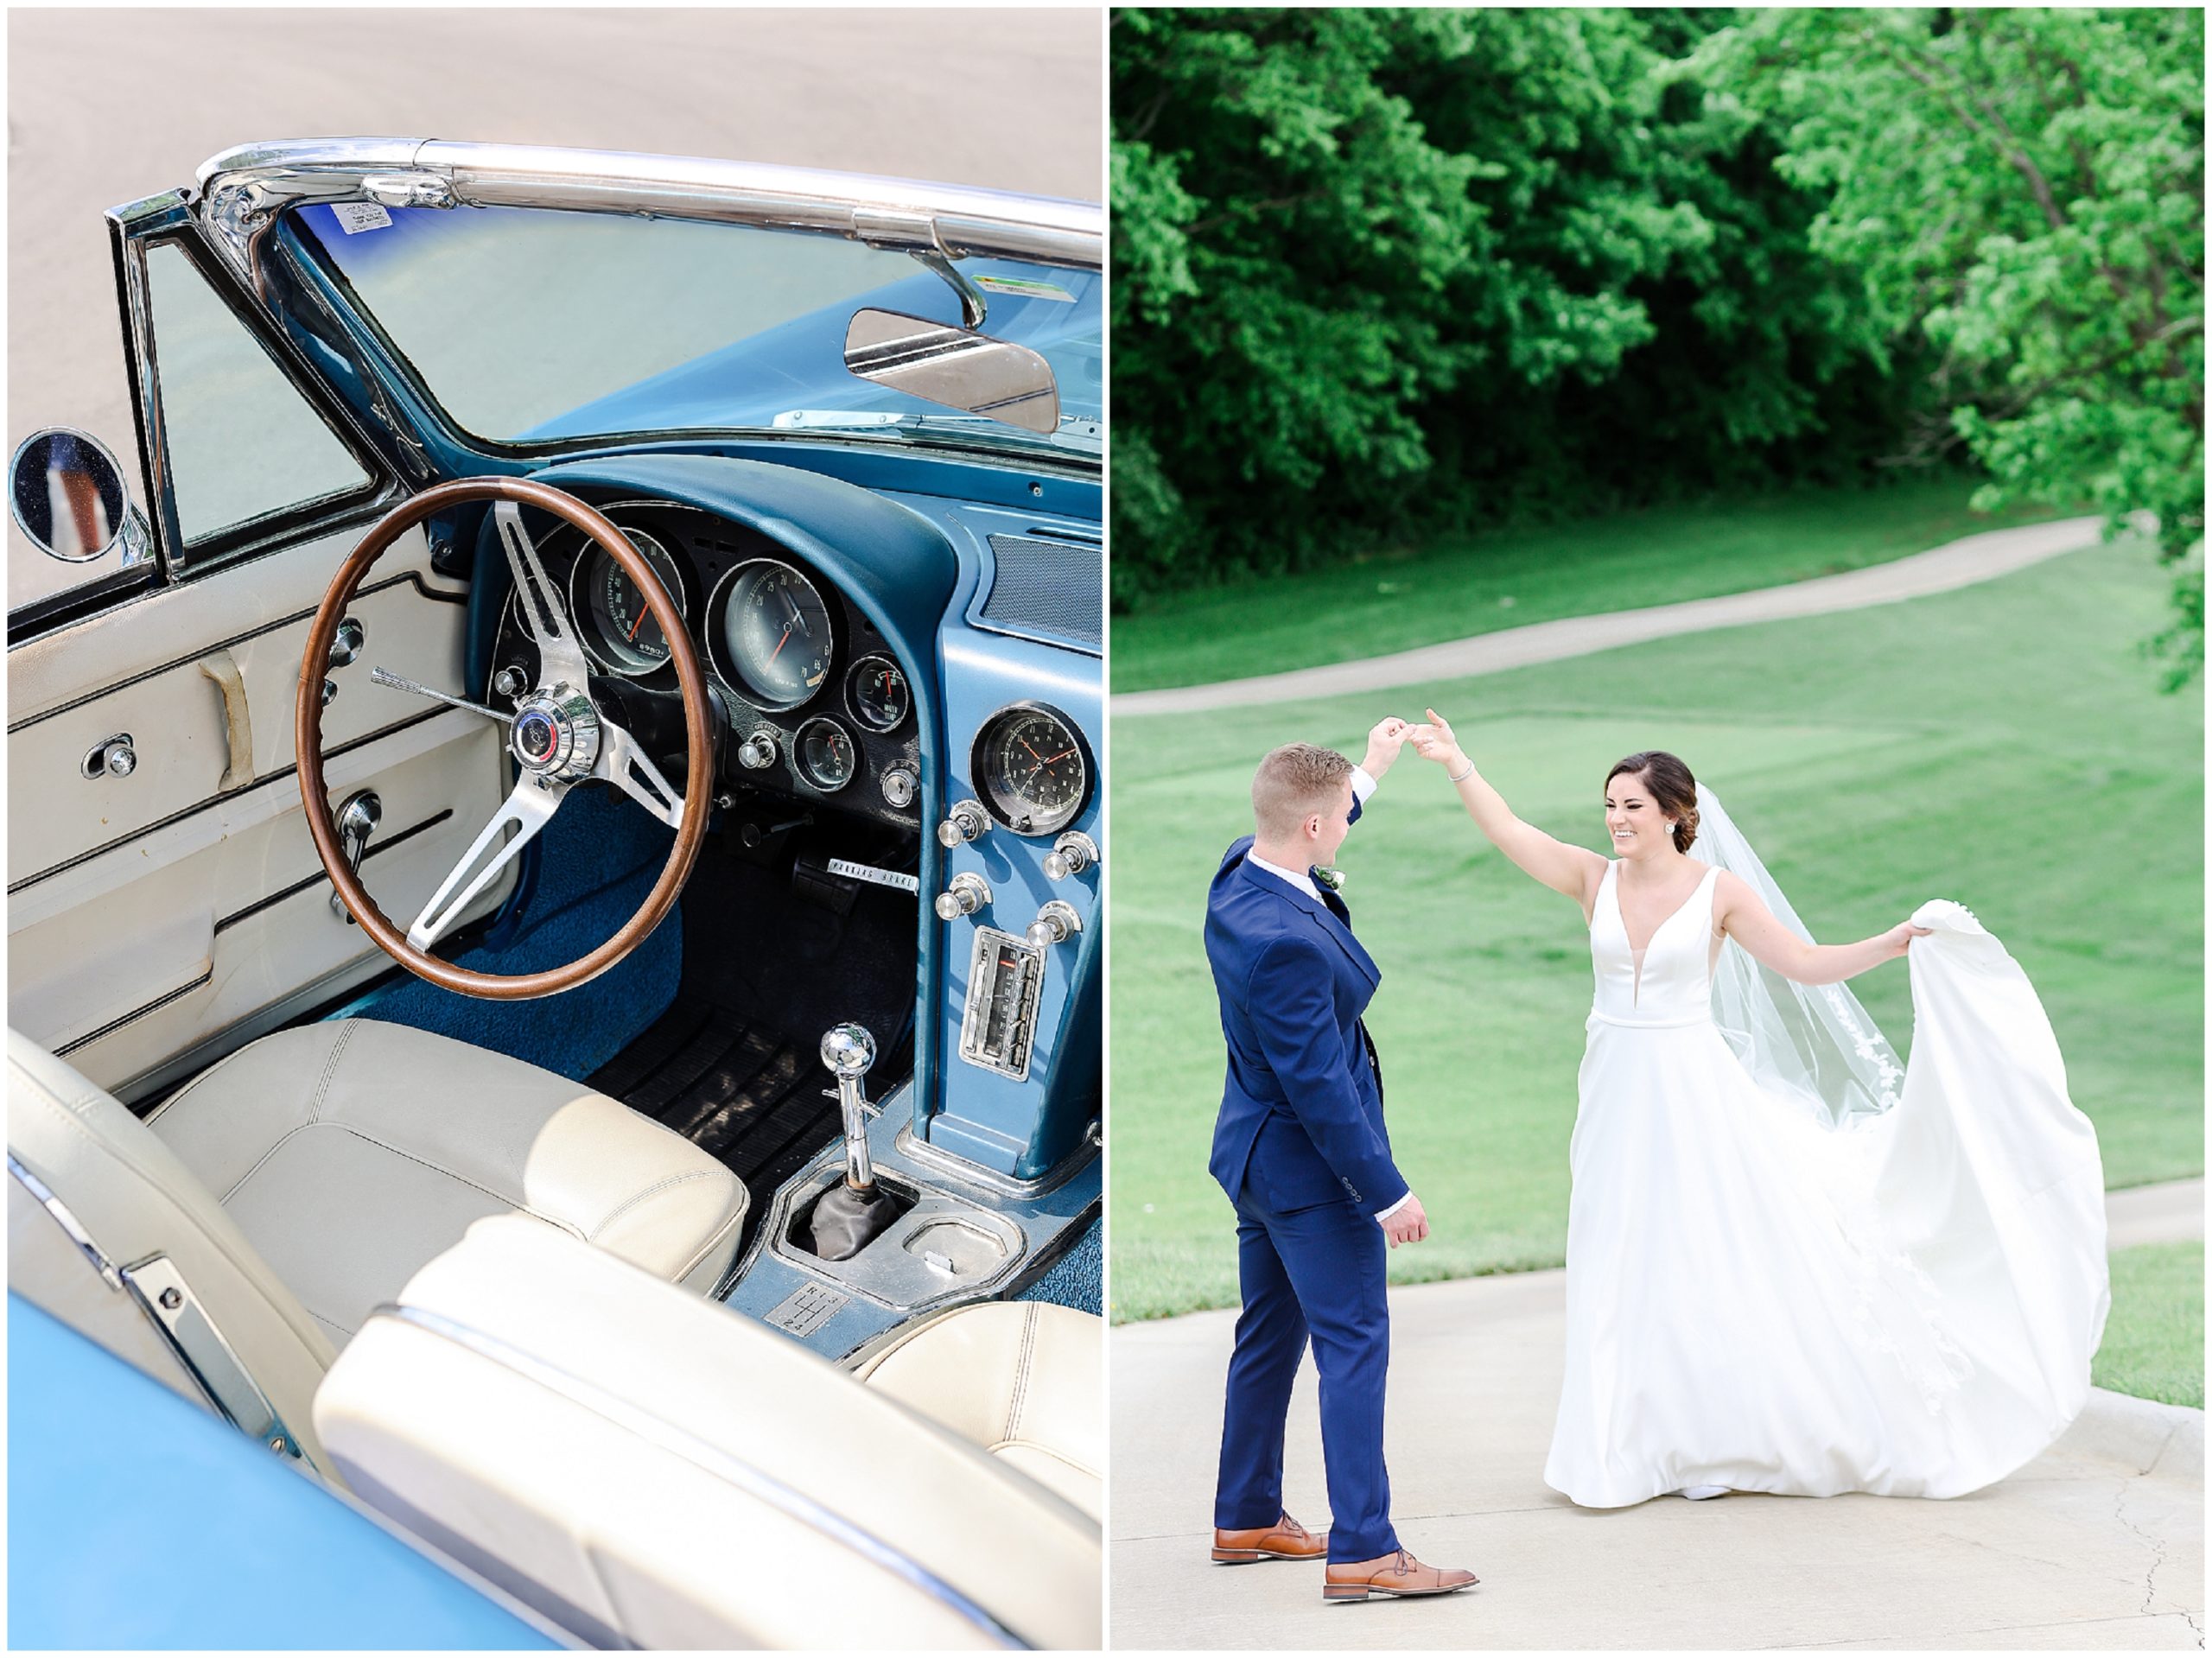 Kansas City Oakwood Country Club Wedding Venue - Wedding Photographer - Kansas City Missouri - Wedding Dress & Wedding Details - Wedding Photo with vintage car